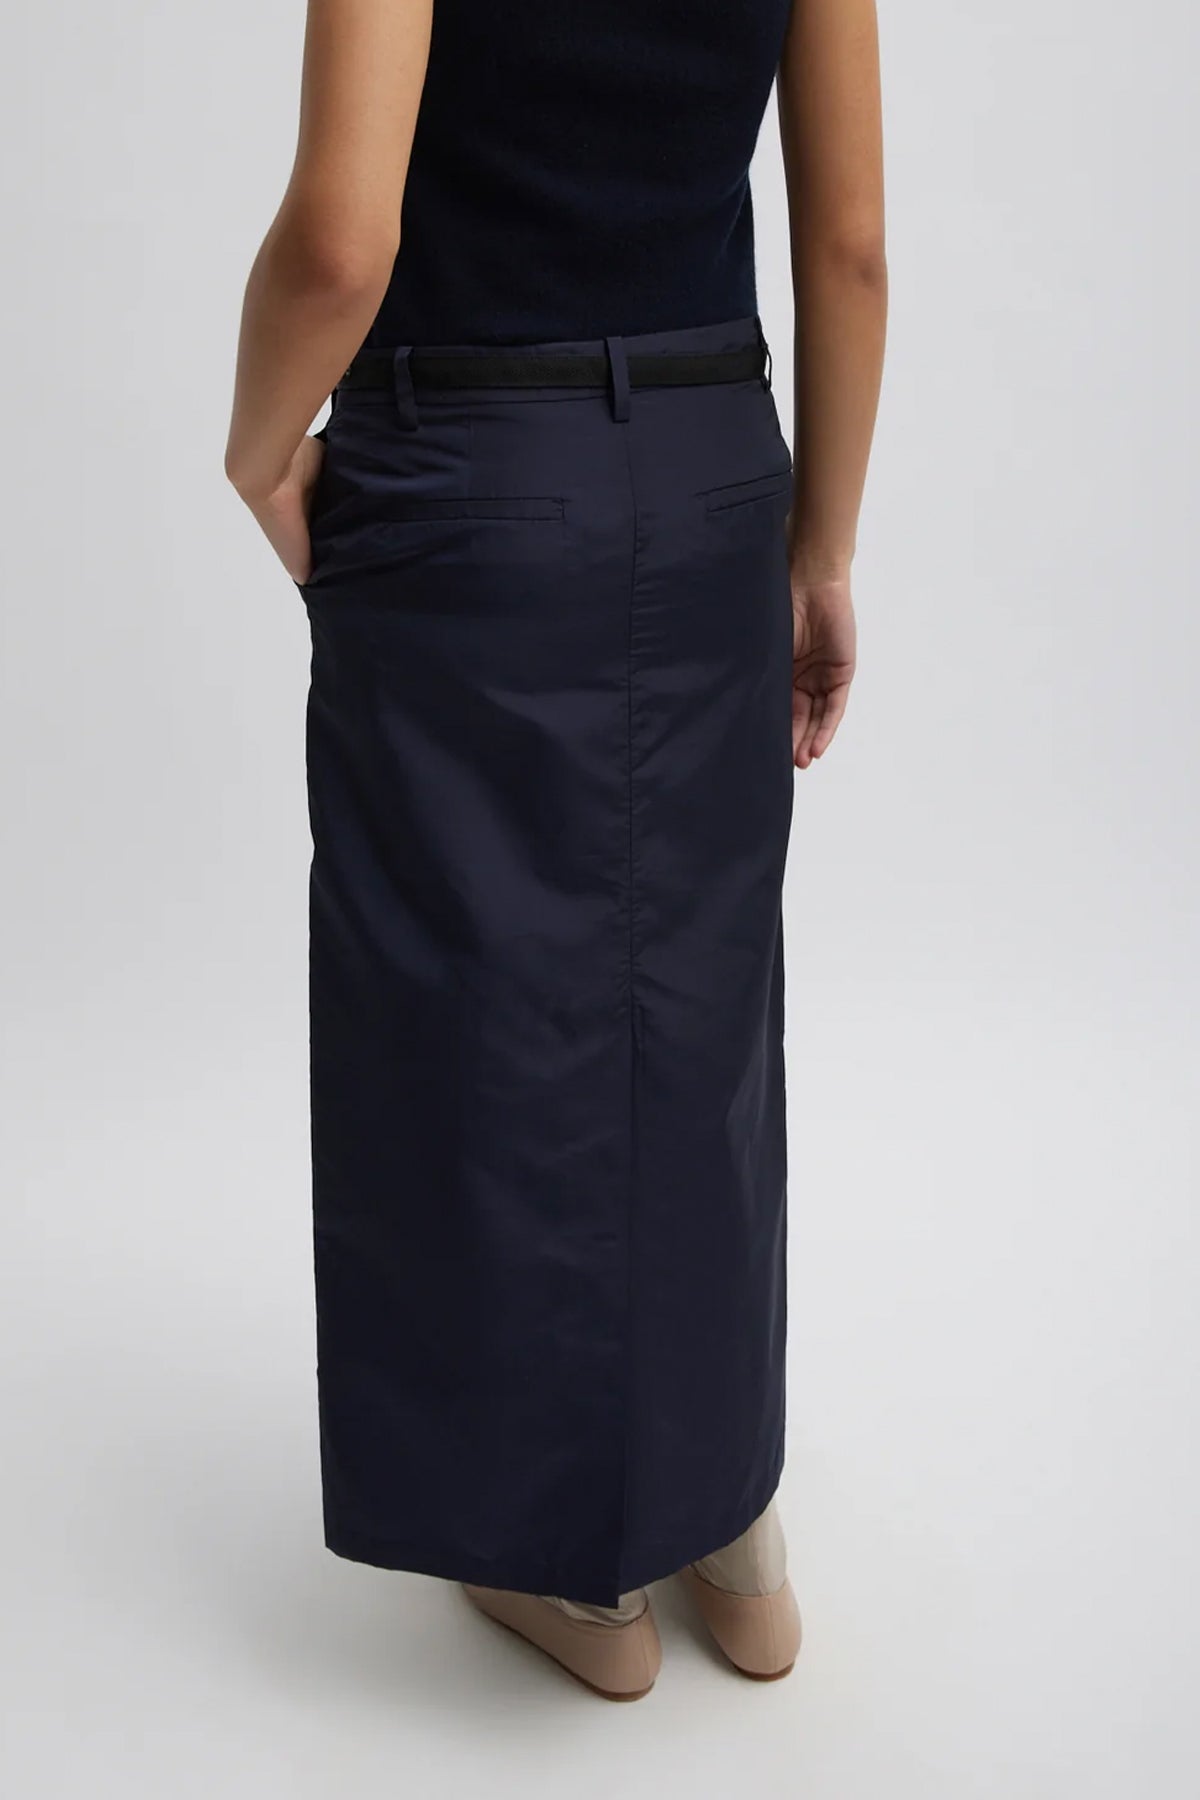 Silk Nylon Maxi Skirt in Navy